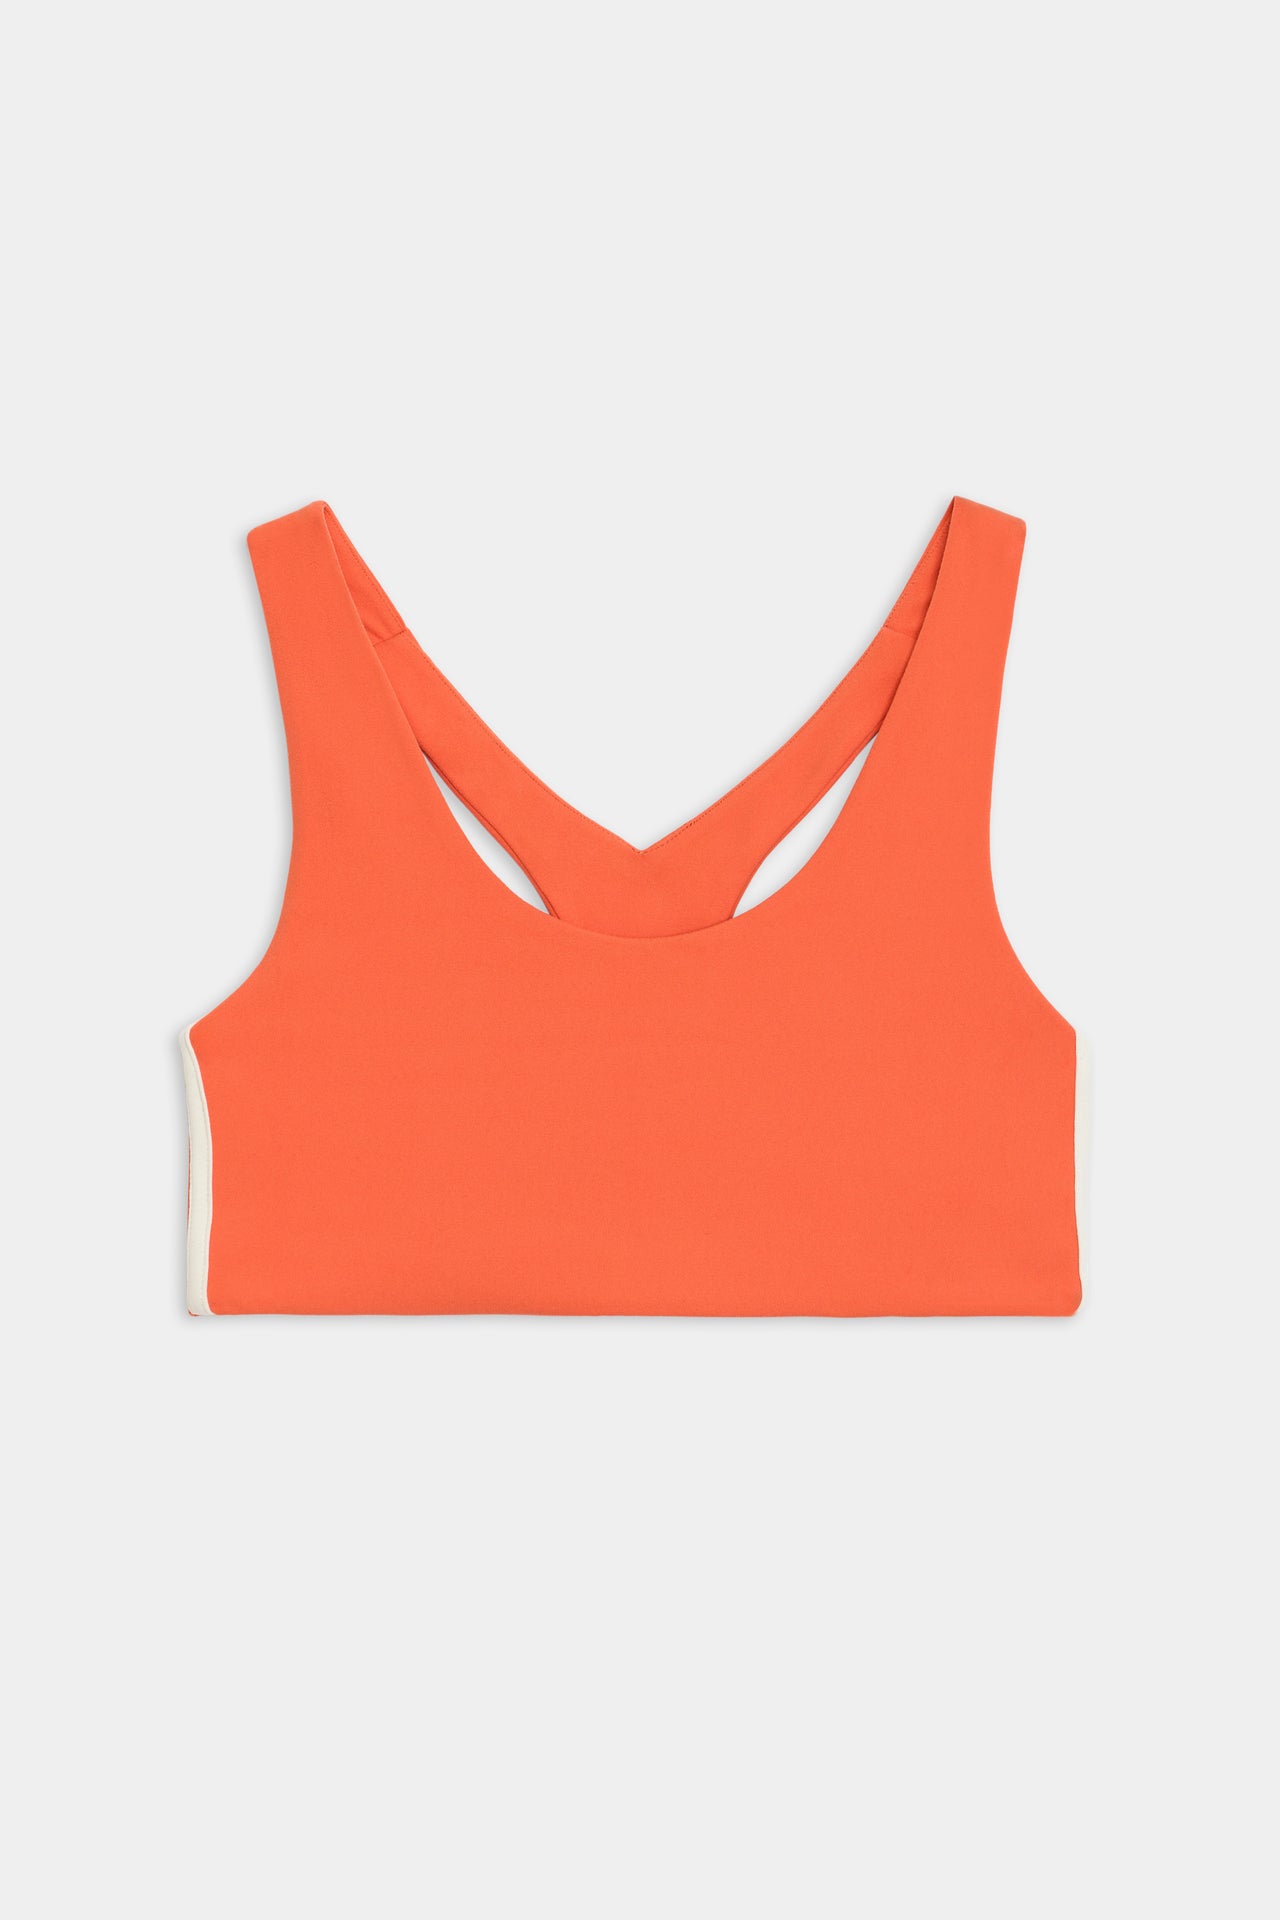 Flat view of orange sports bra with two thin white stripes 